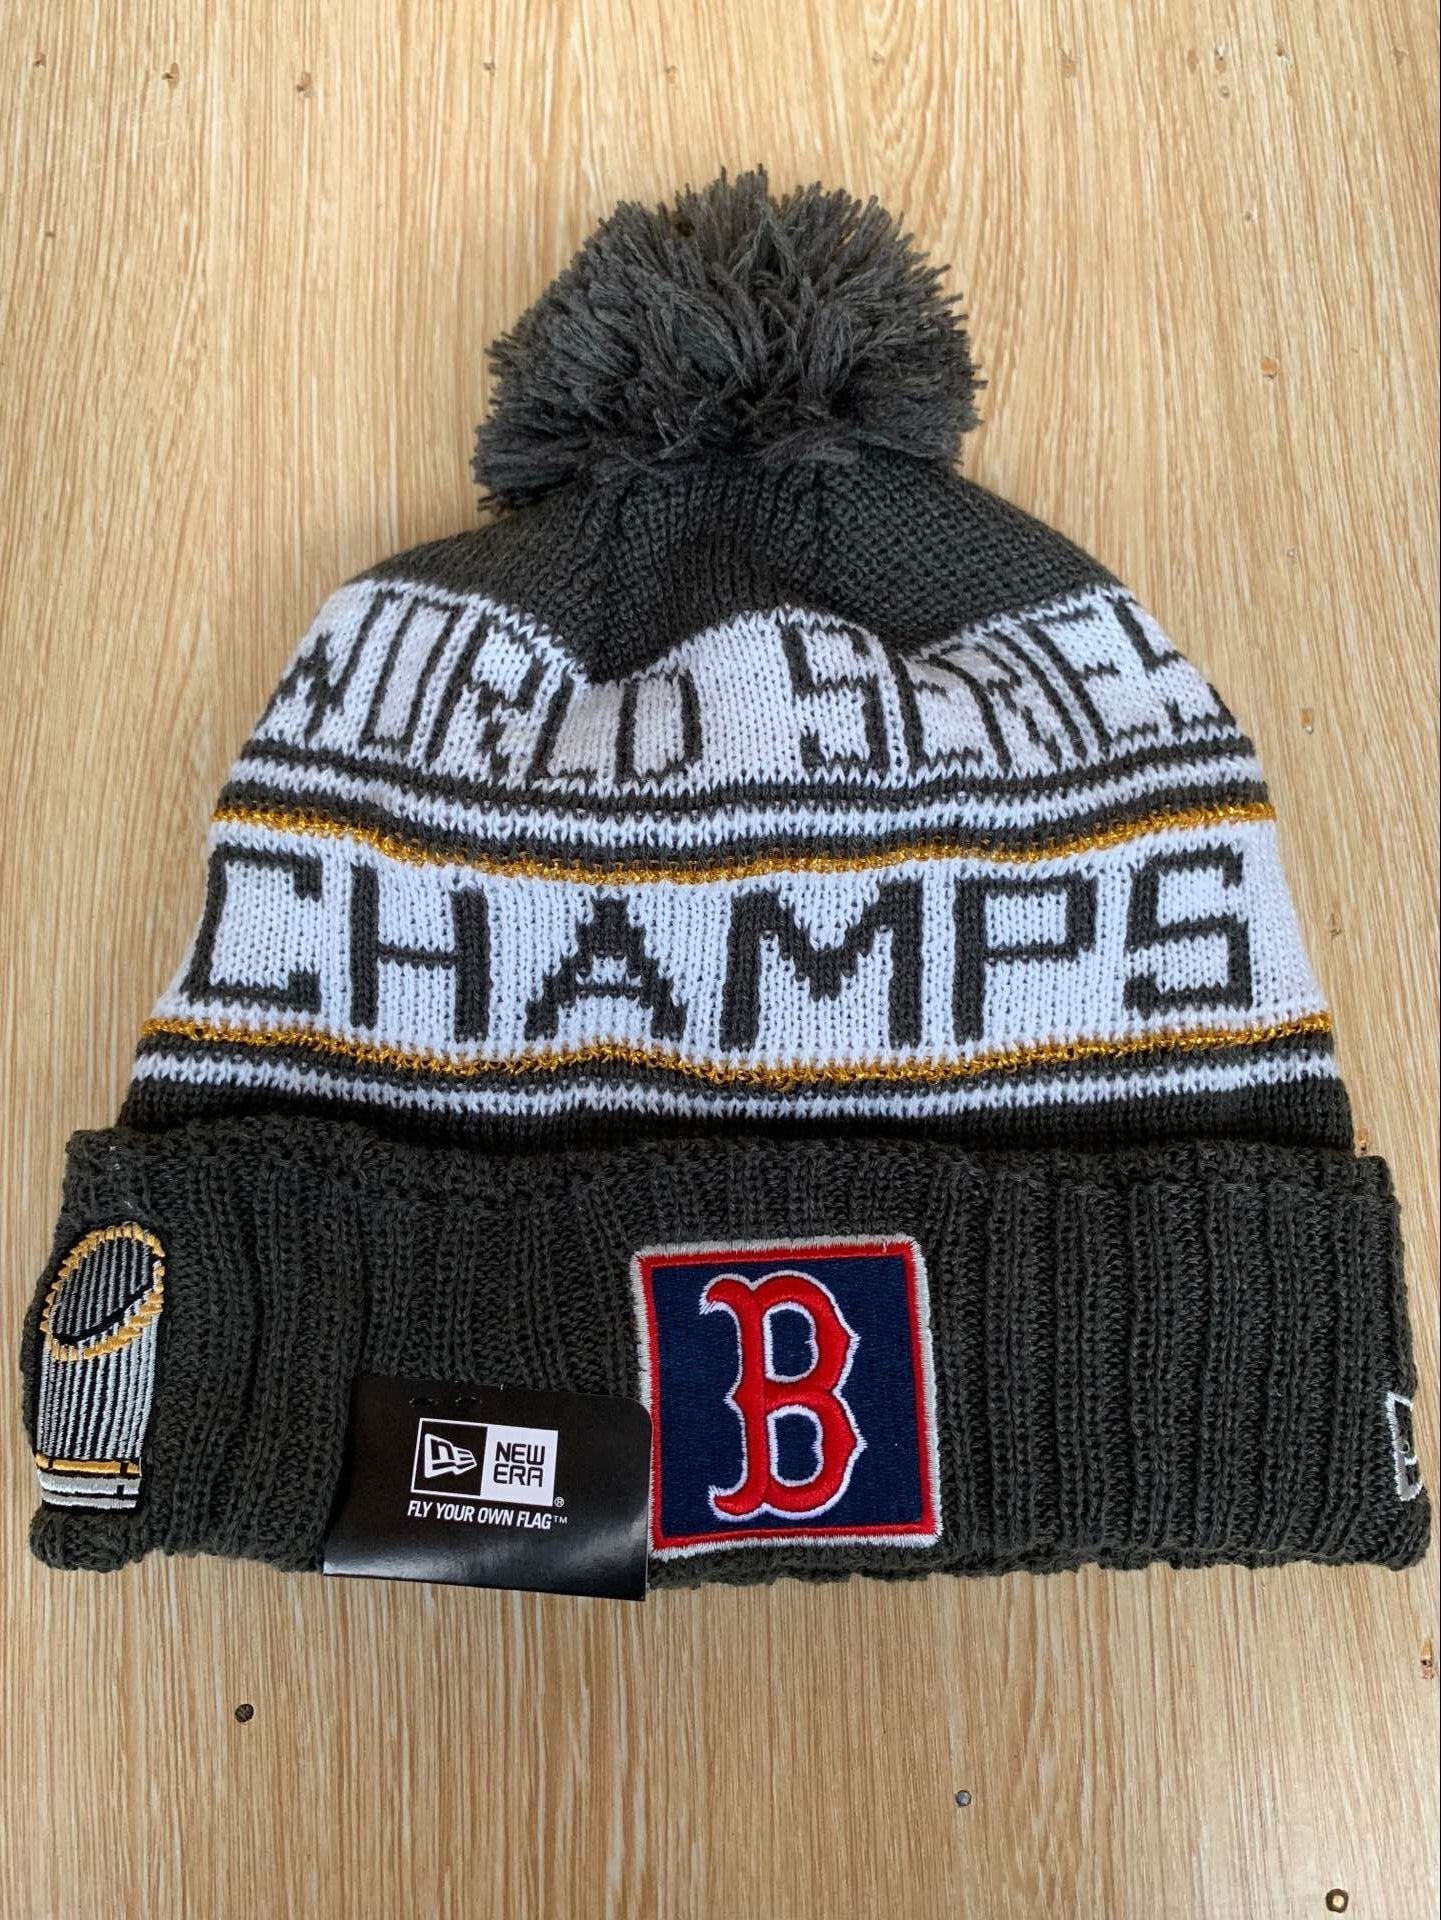 Red Sox 2018 World Series Champions Pom Knit Hat YD